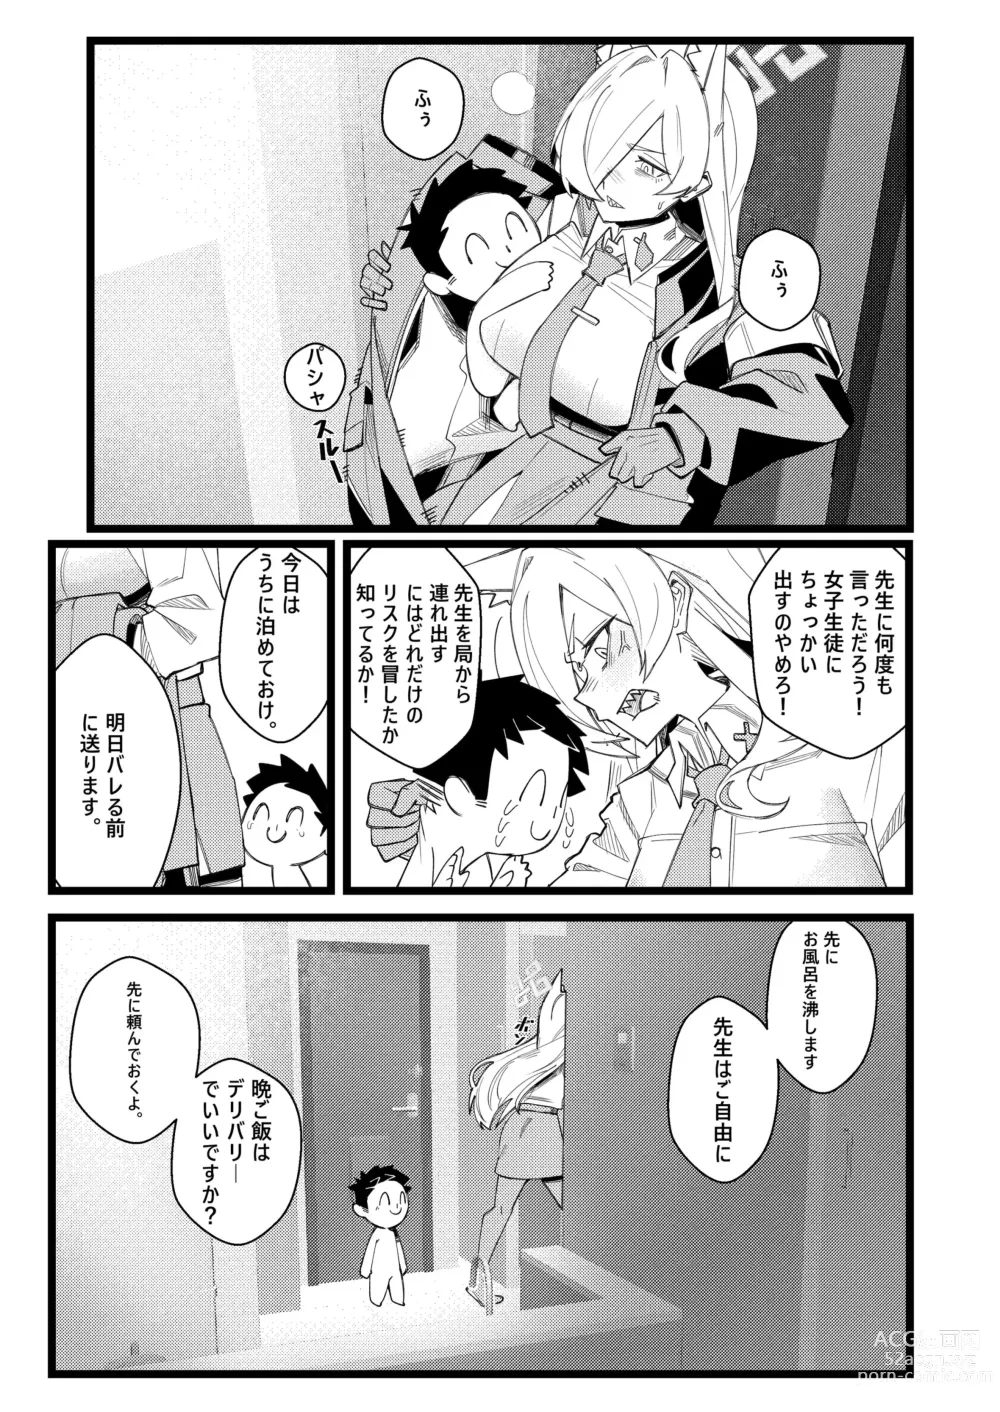 Page 4 of doujinshi Captain Kanna, Police Discipline Breakdown